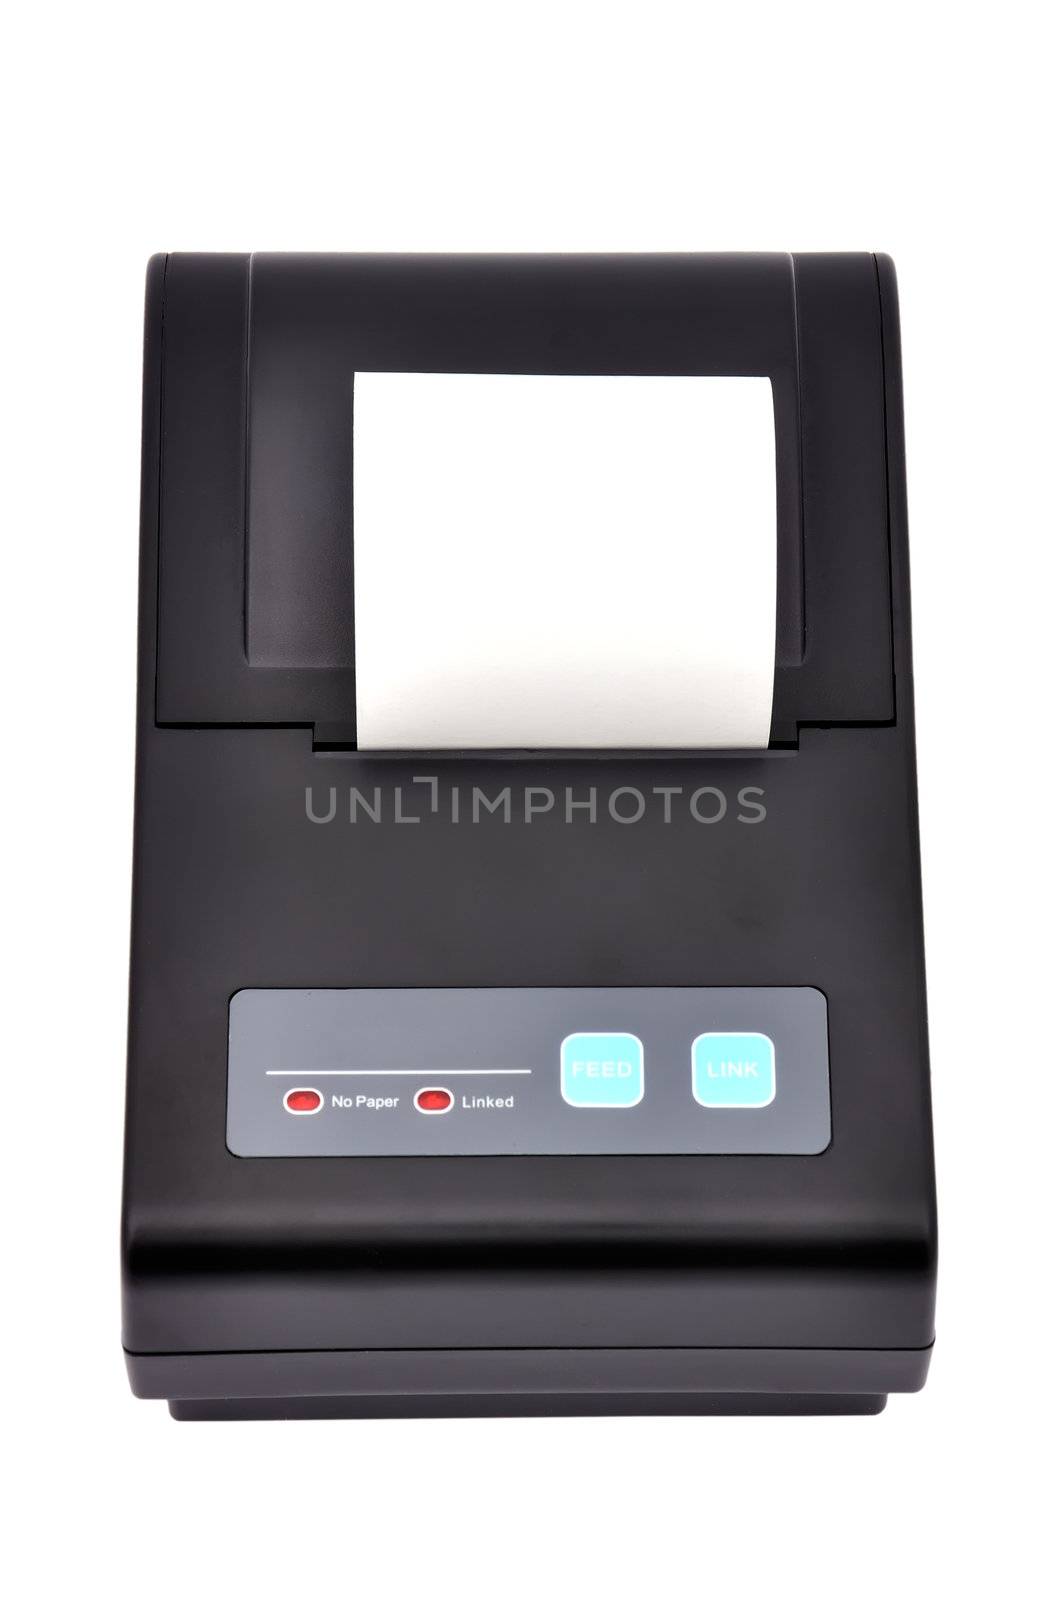 Black printer for fiscal cash register on a white background